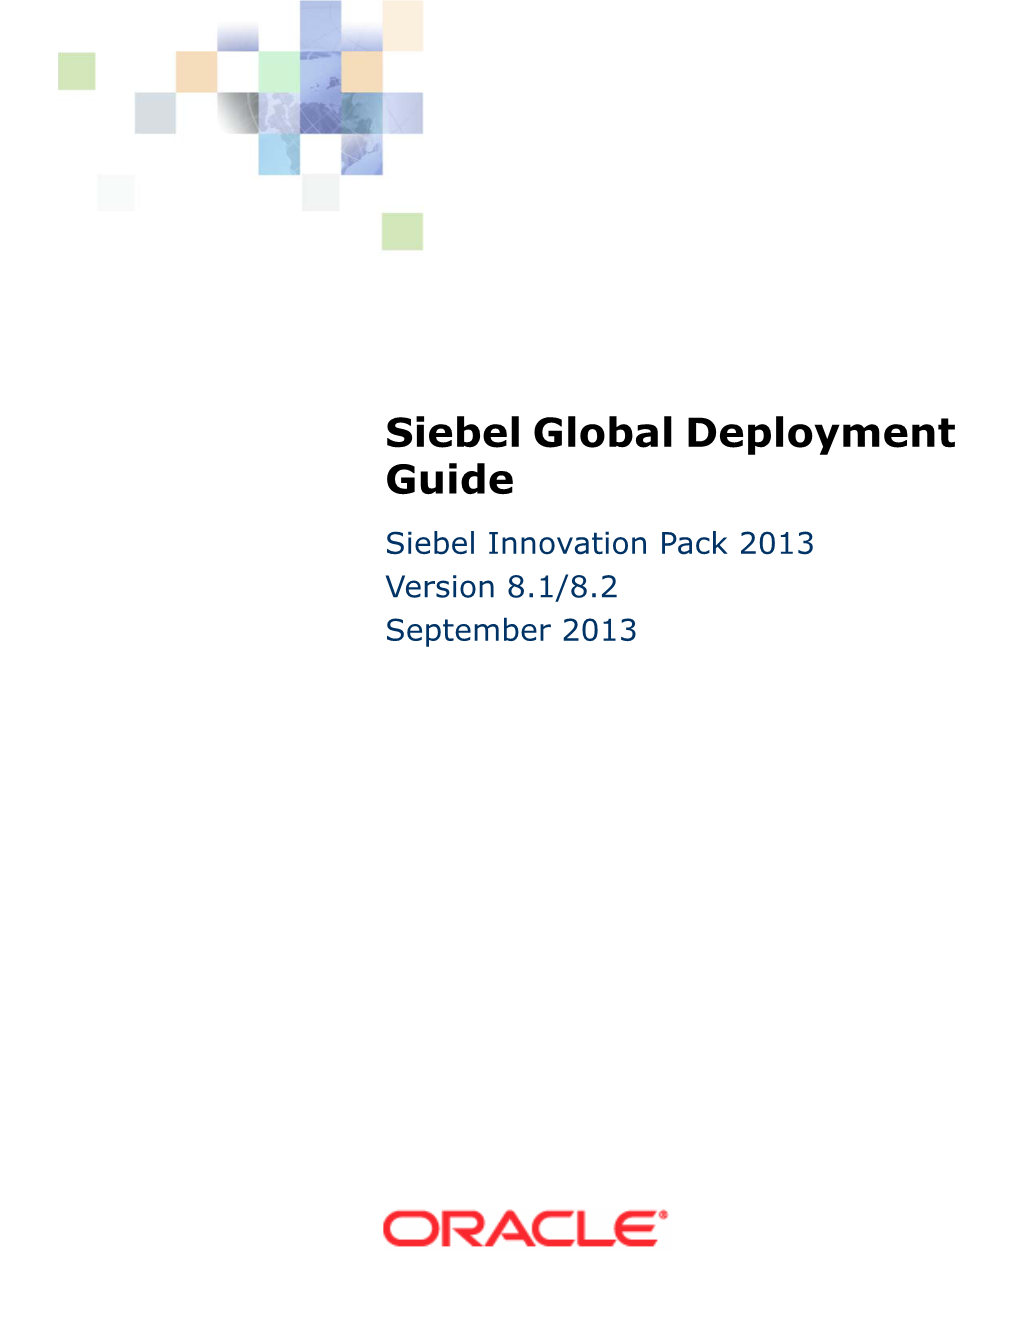 Siebel Global Deployment Guide Siebel Innovation Pack 2013 Version 8.1/8.2 September 2013